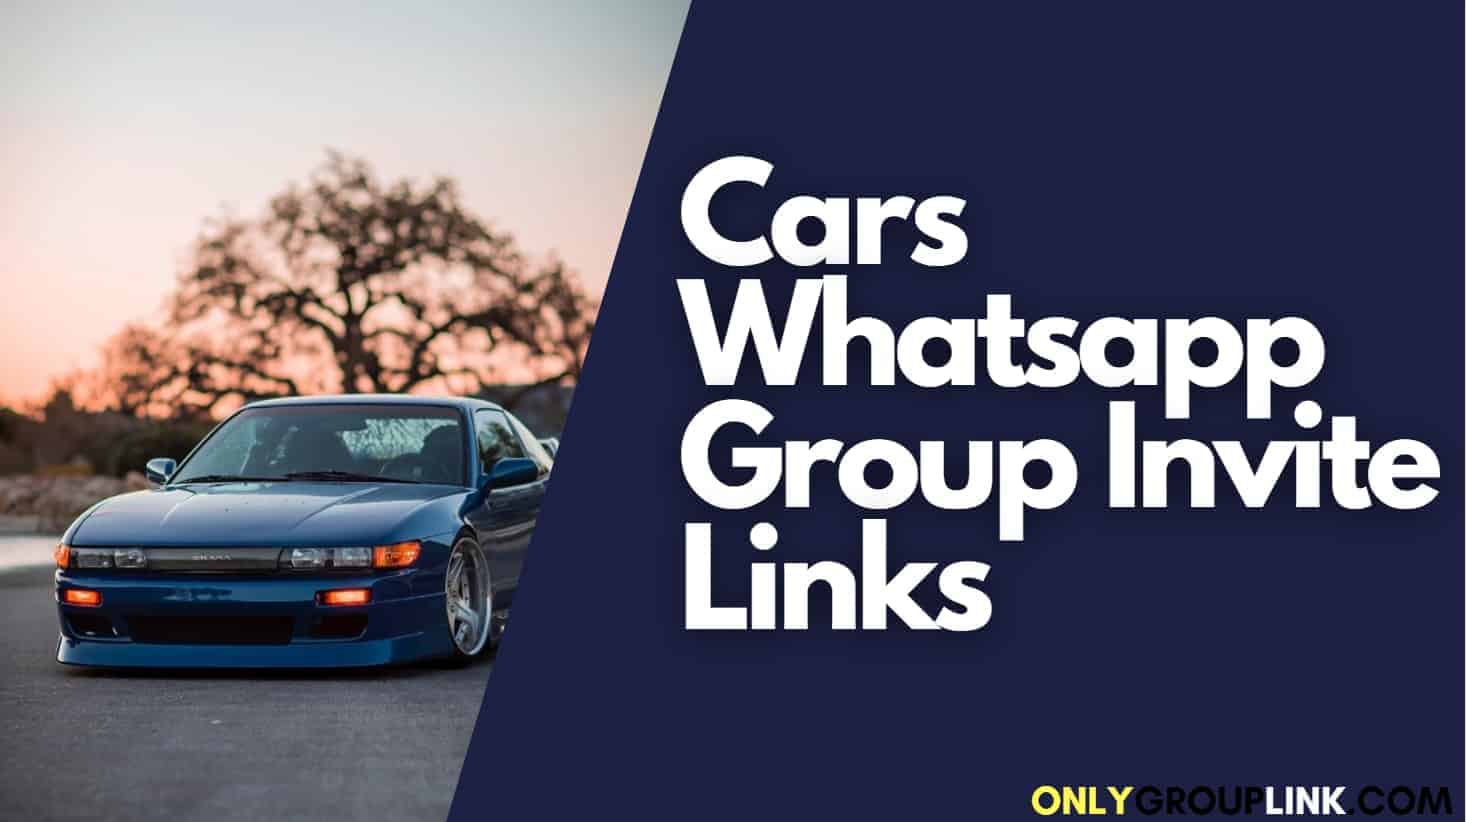 Cars Whatsapp Group Links